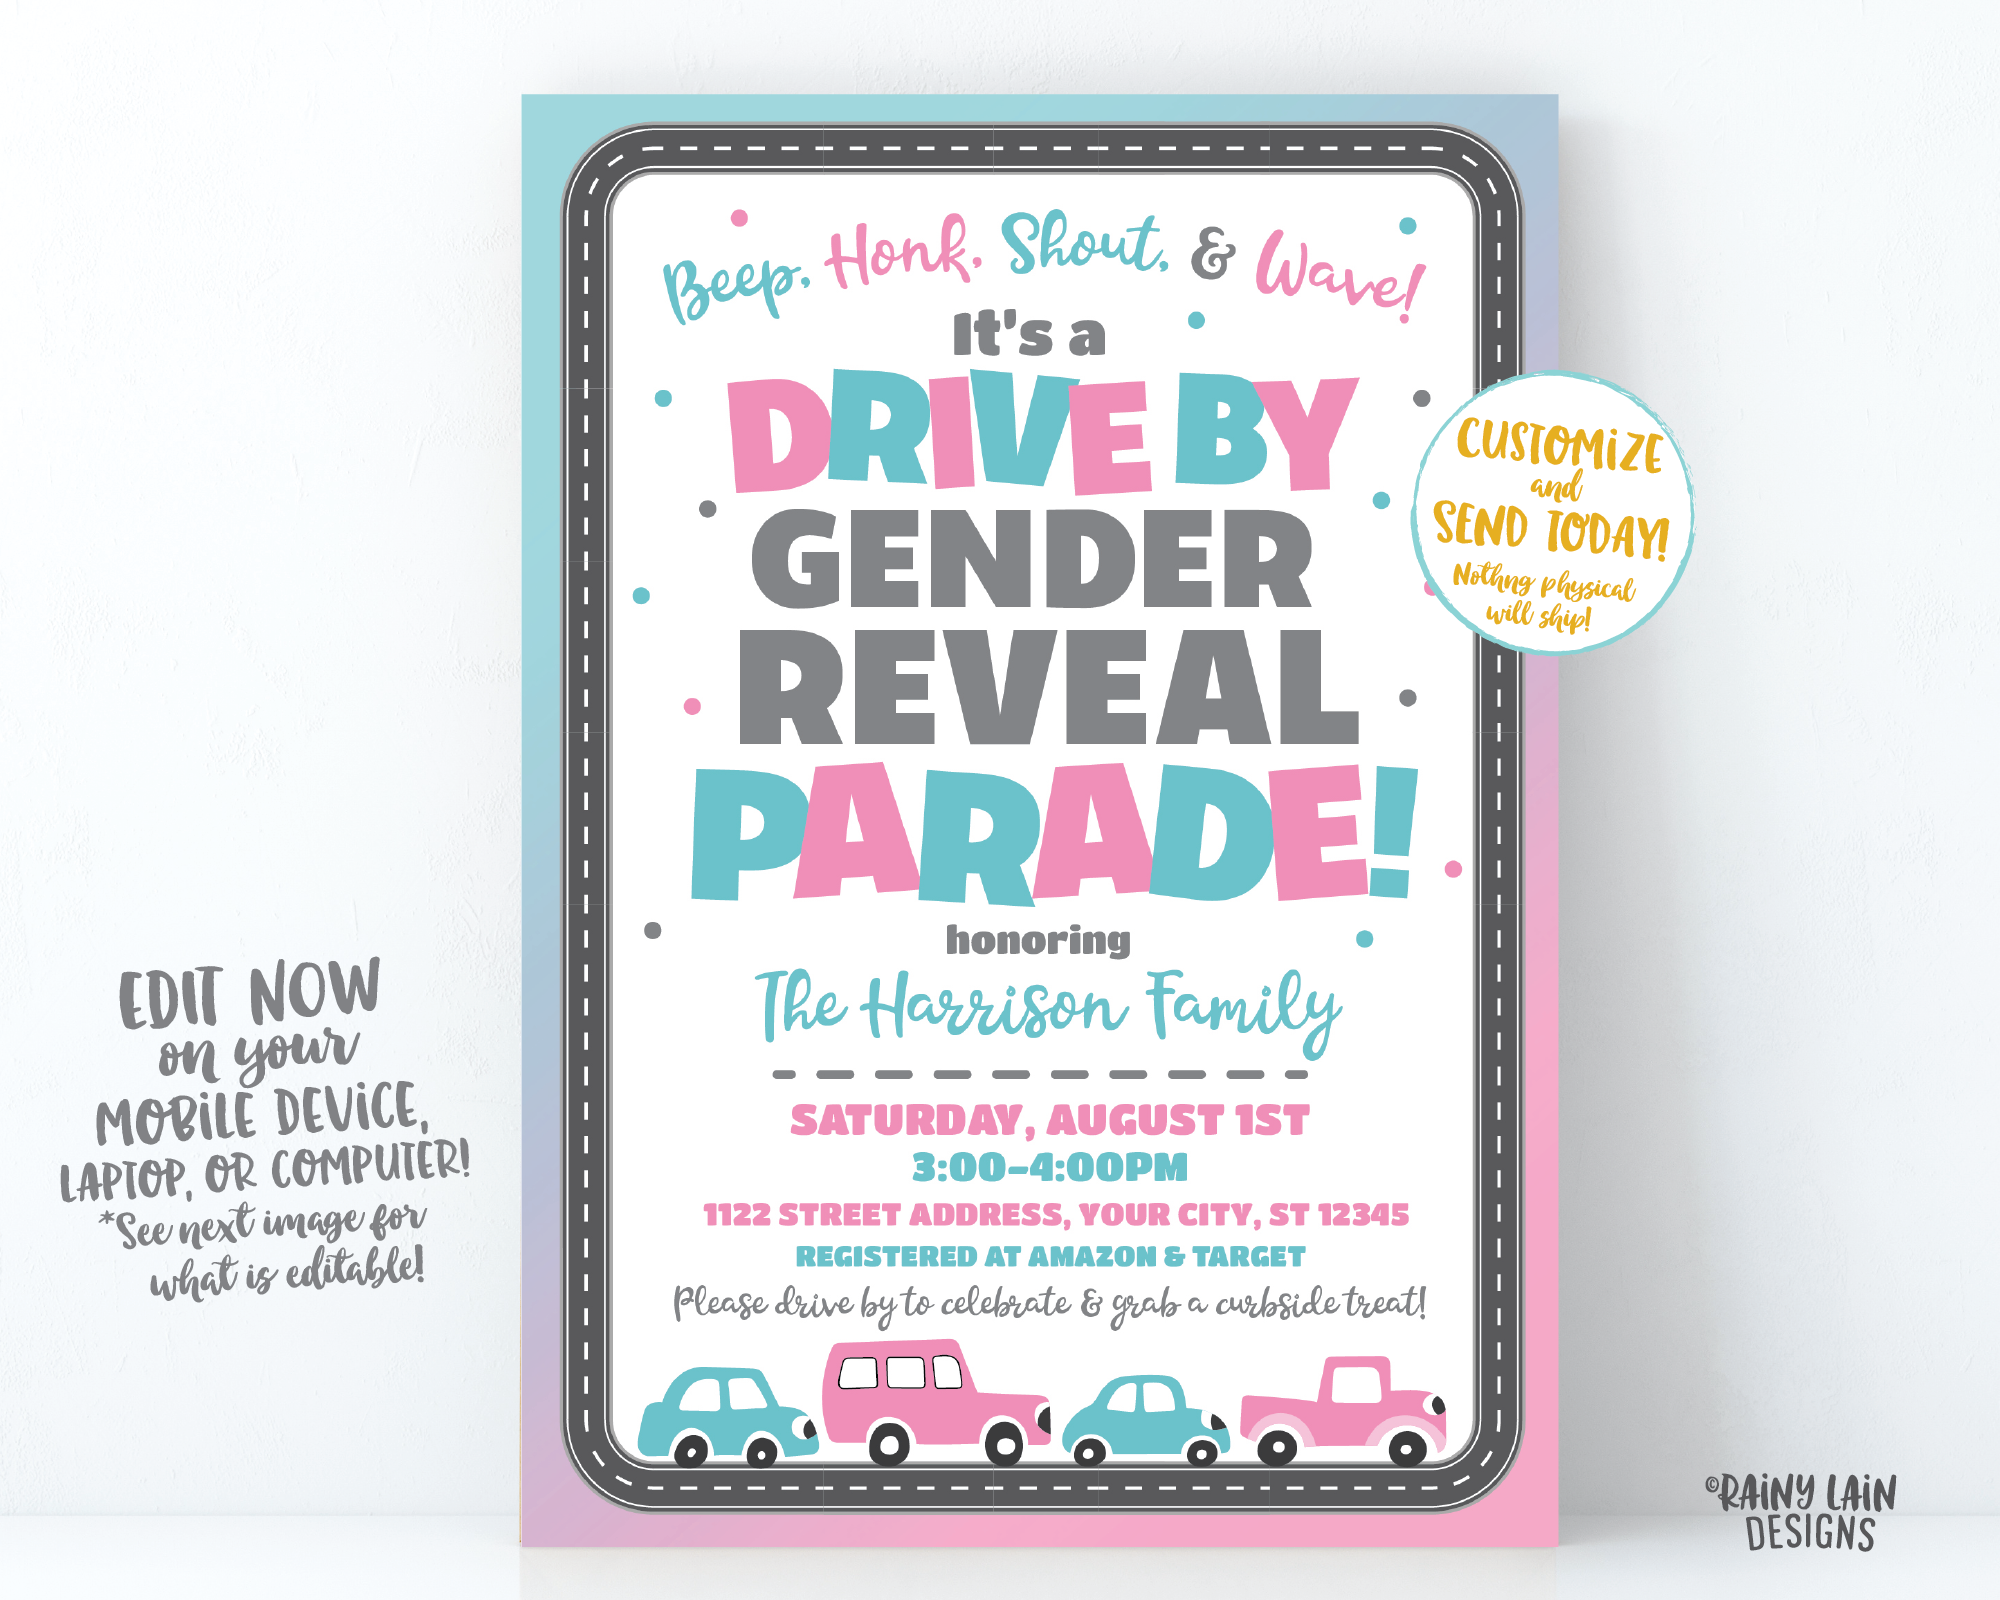 Drive By Gender Reveal Invitation Gender Reveal Drive By Invite Gender Reveal Drive By Parade Social Distancing Through Gender Reveal Invite